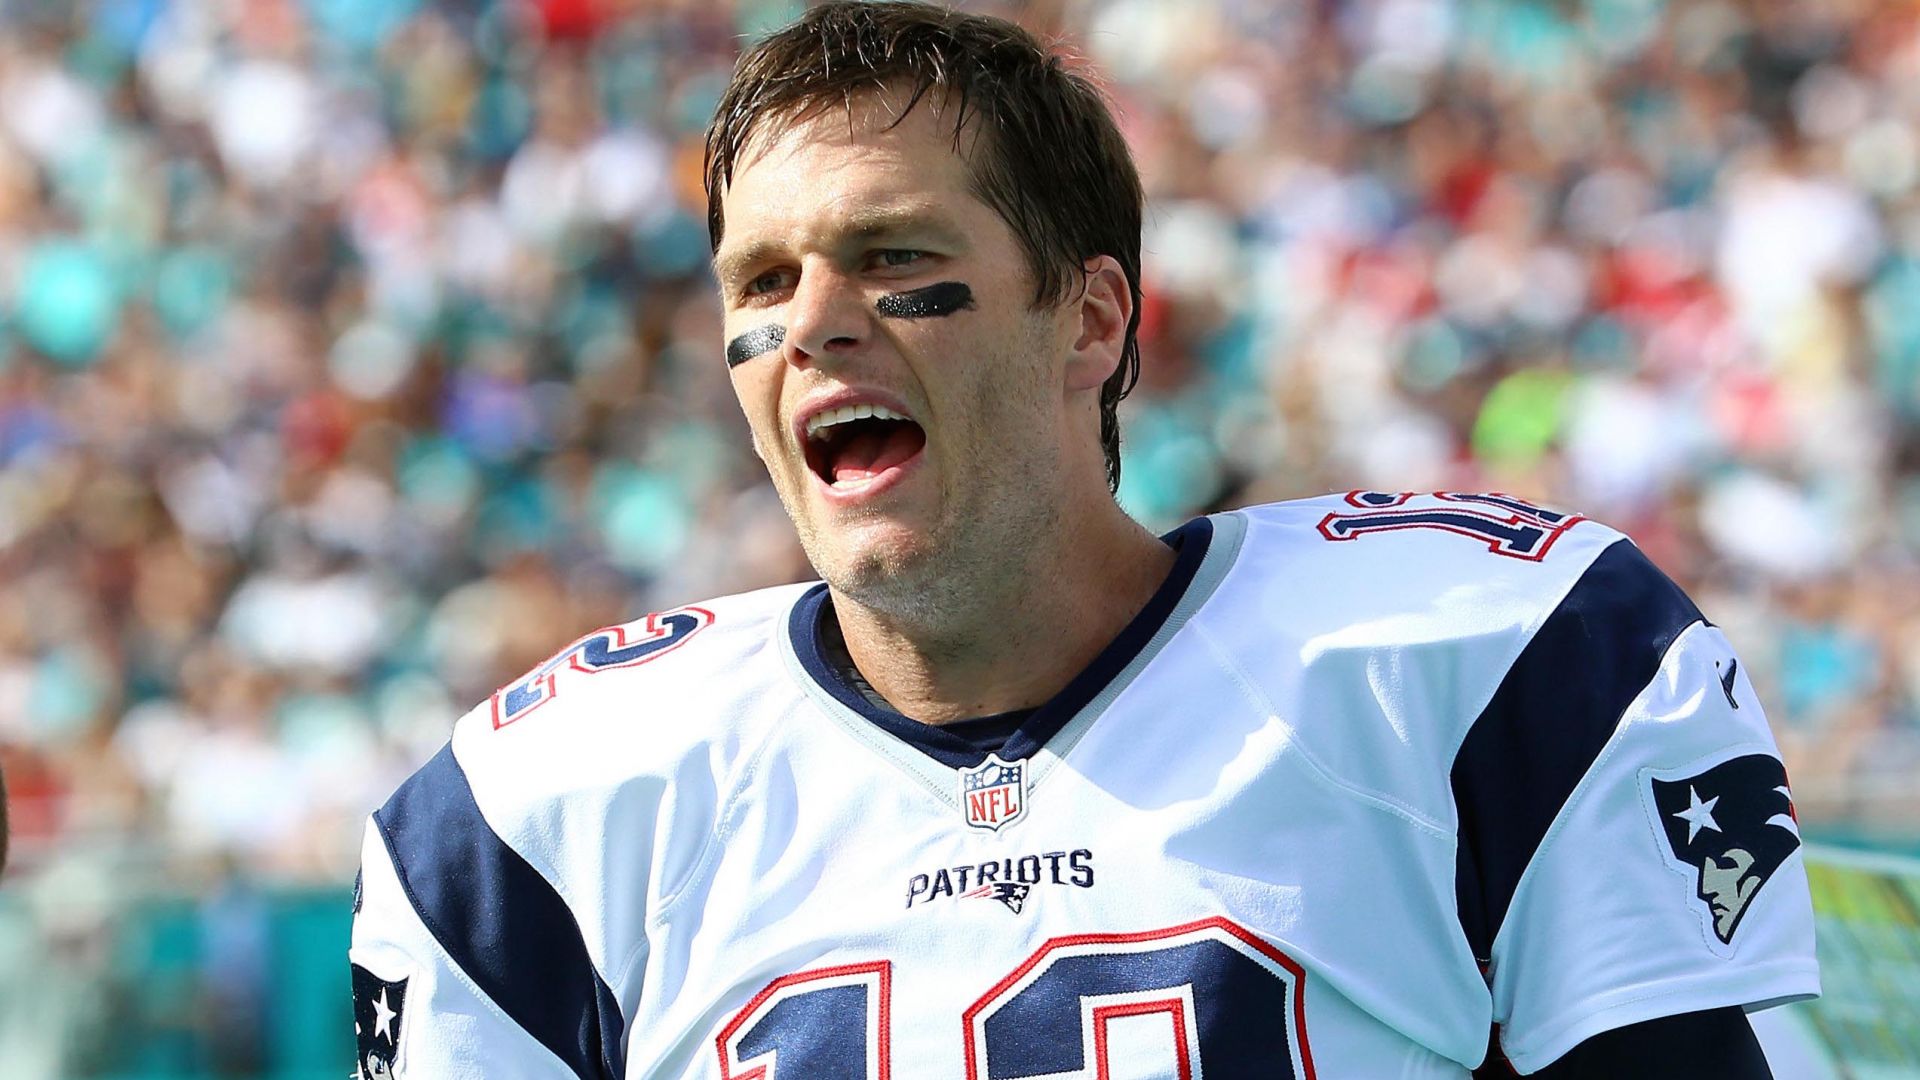 Wallpaper Tom Brady, american football, player, sports